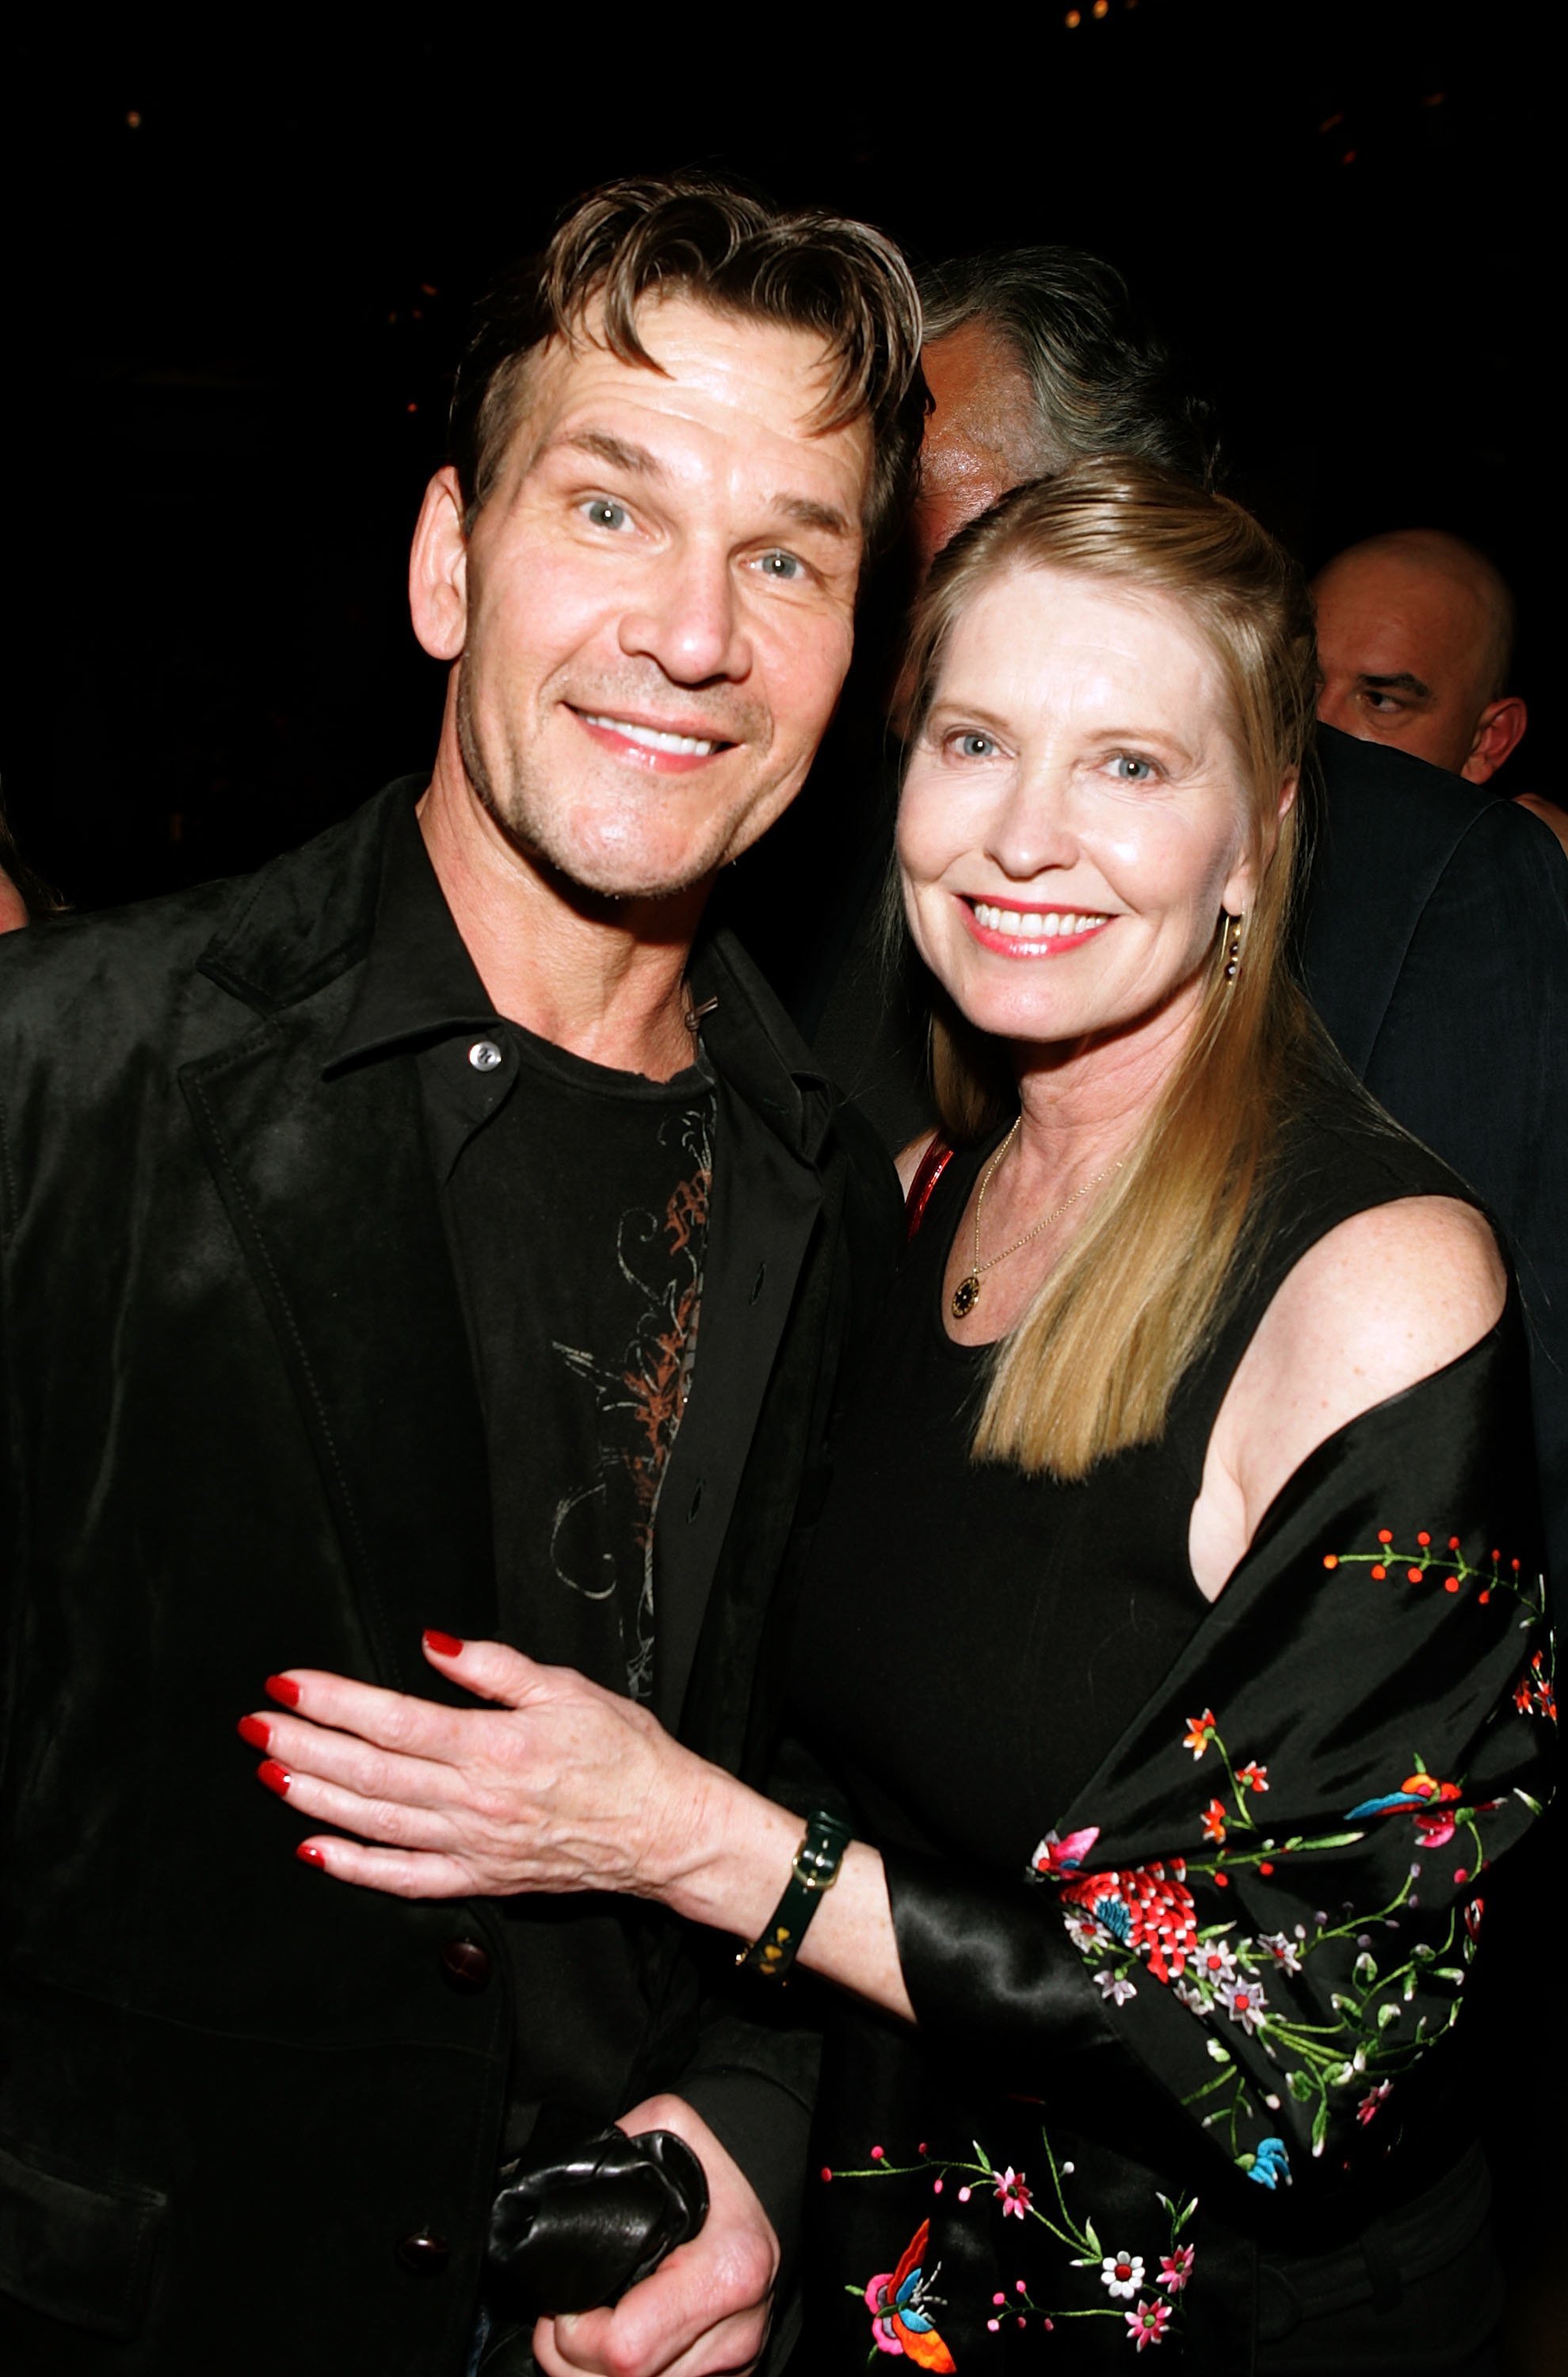 Patrick Swayze und seine Frau Liza Swayze | Quelle: Getty Images